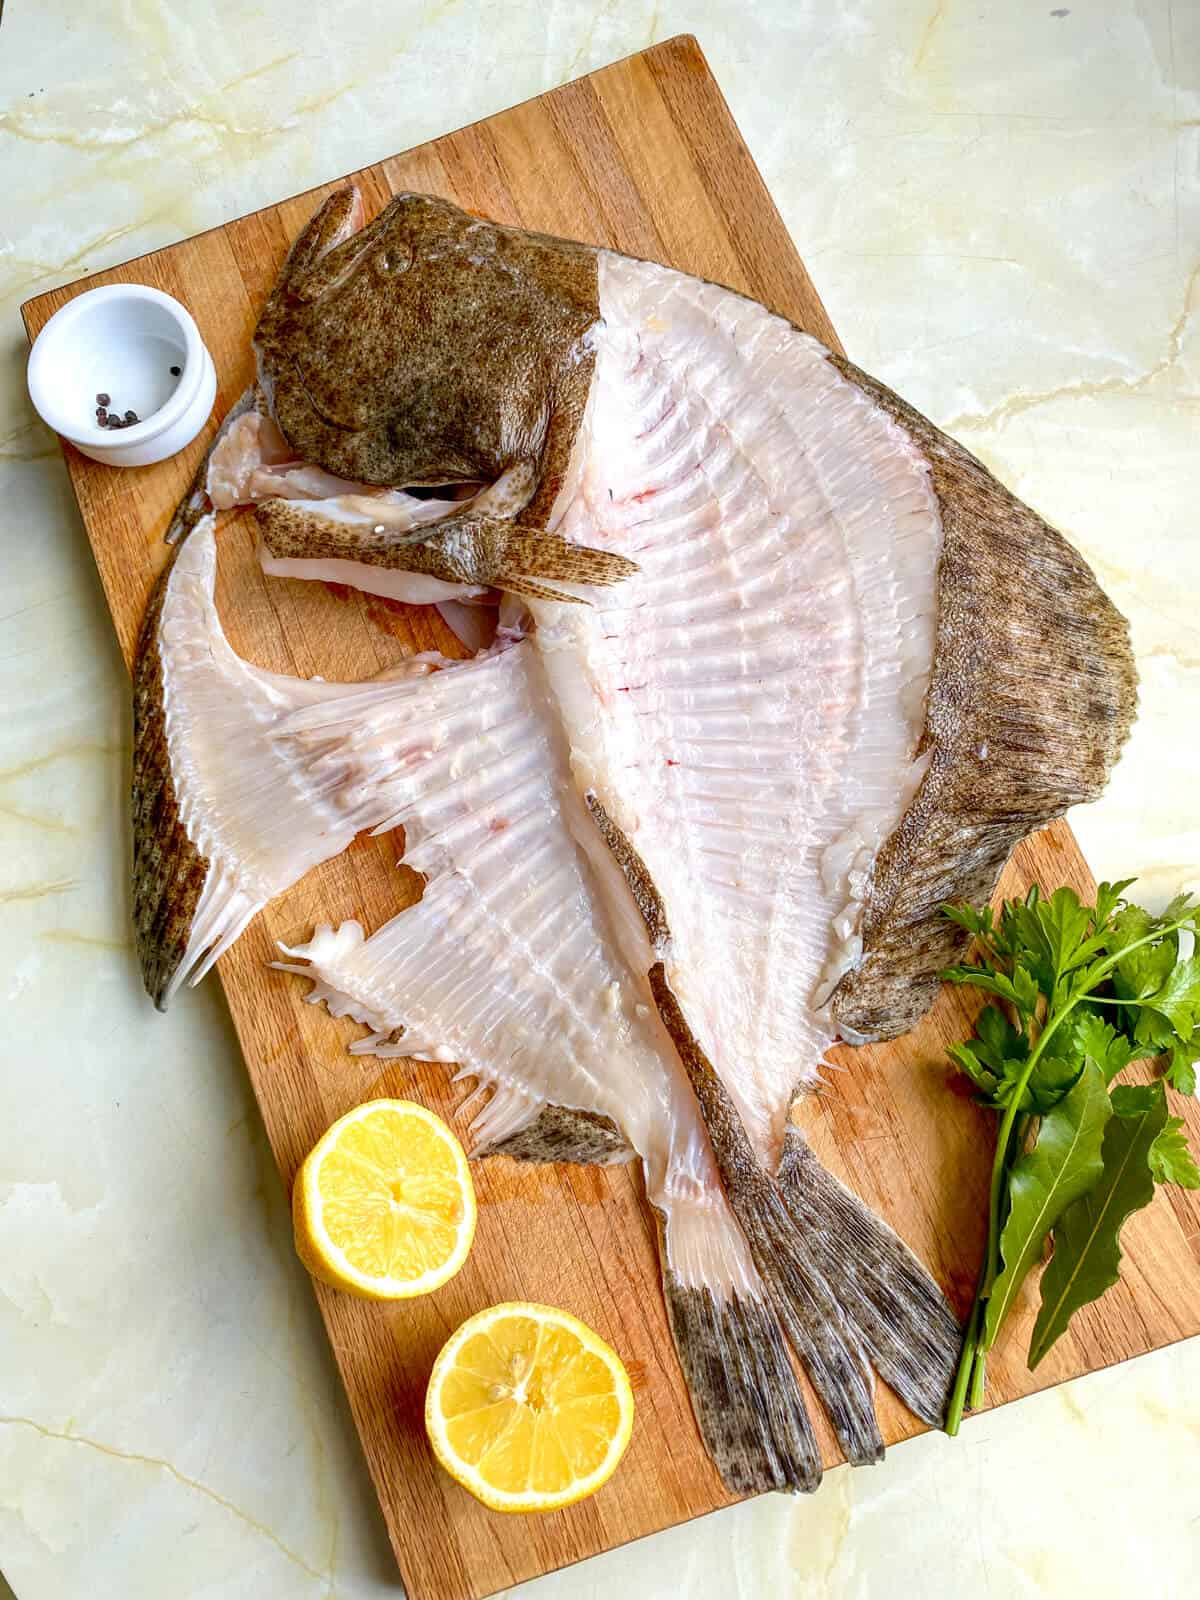 The ingredients for fish stock: fish bones, peppercorns, herbs and lemon. 